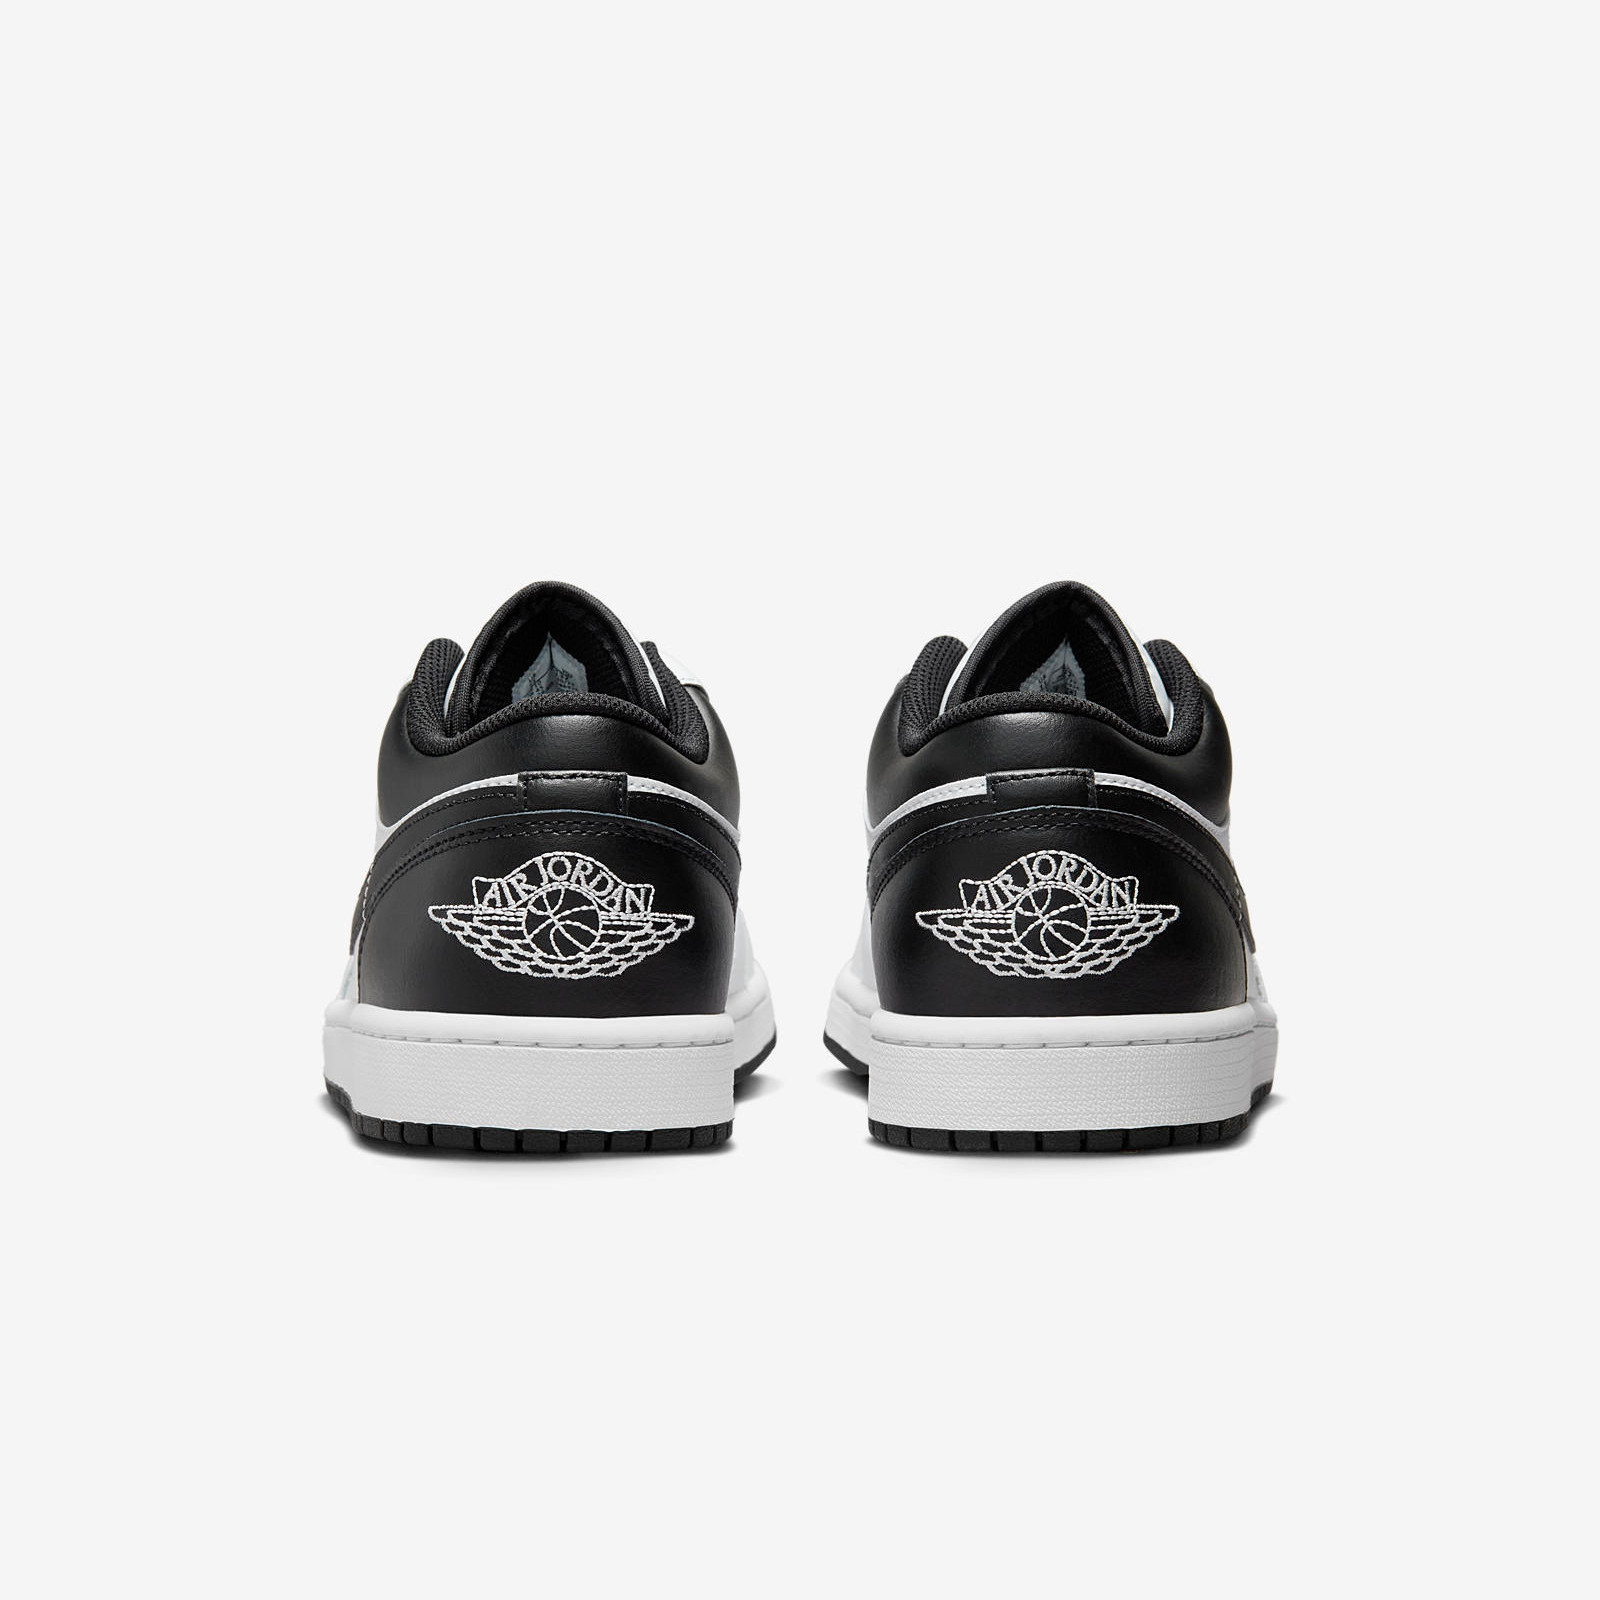 Air Jordan 1 Low
White / Black